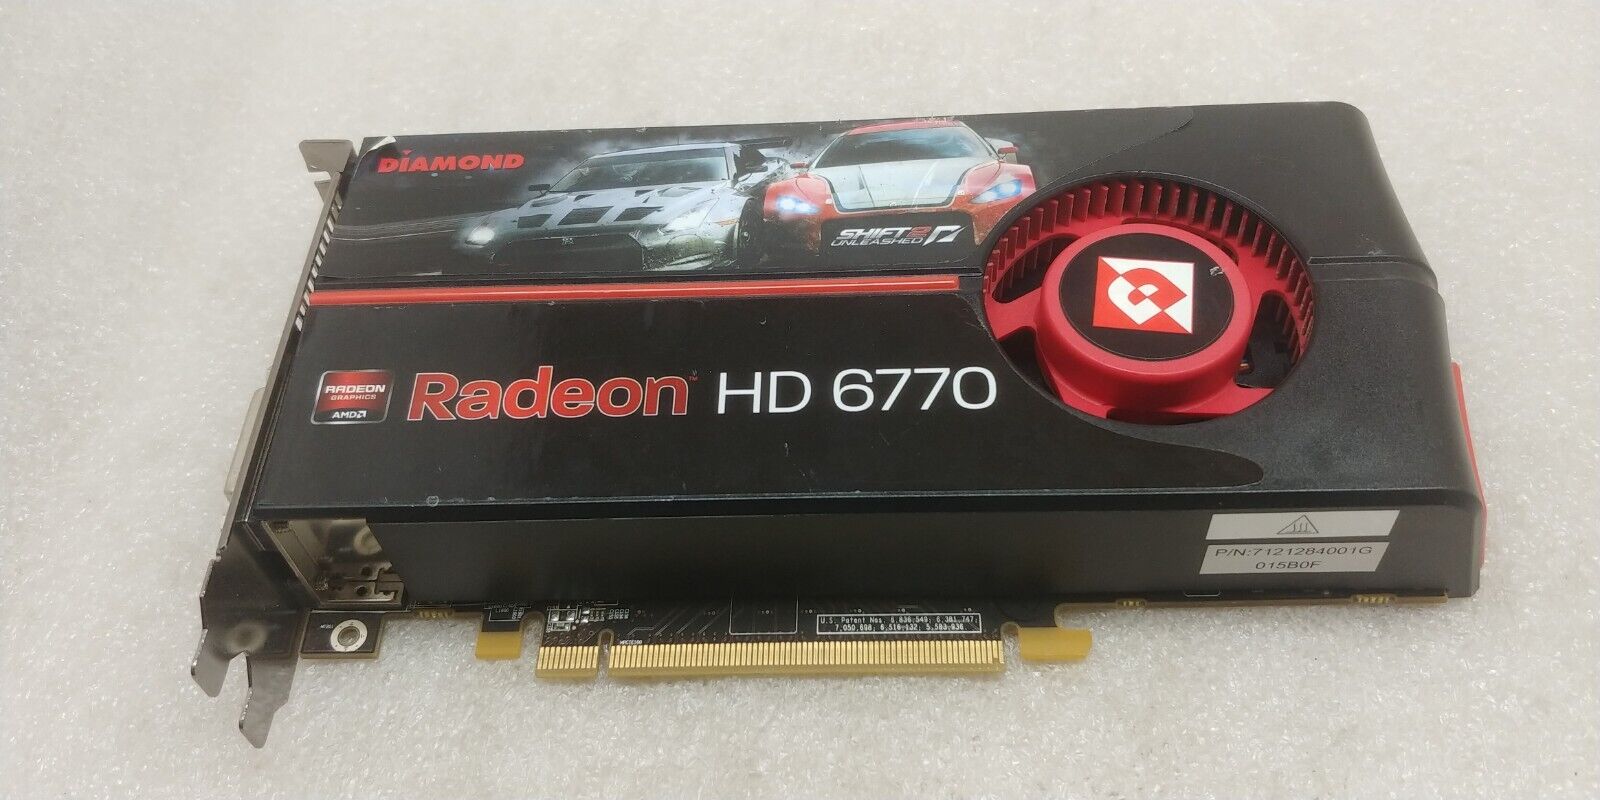 AMD Diamond Radeon HD 6770 1G GDDR5 7120284000G Video Card ATI-102-C01002(B) FS